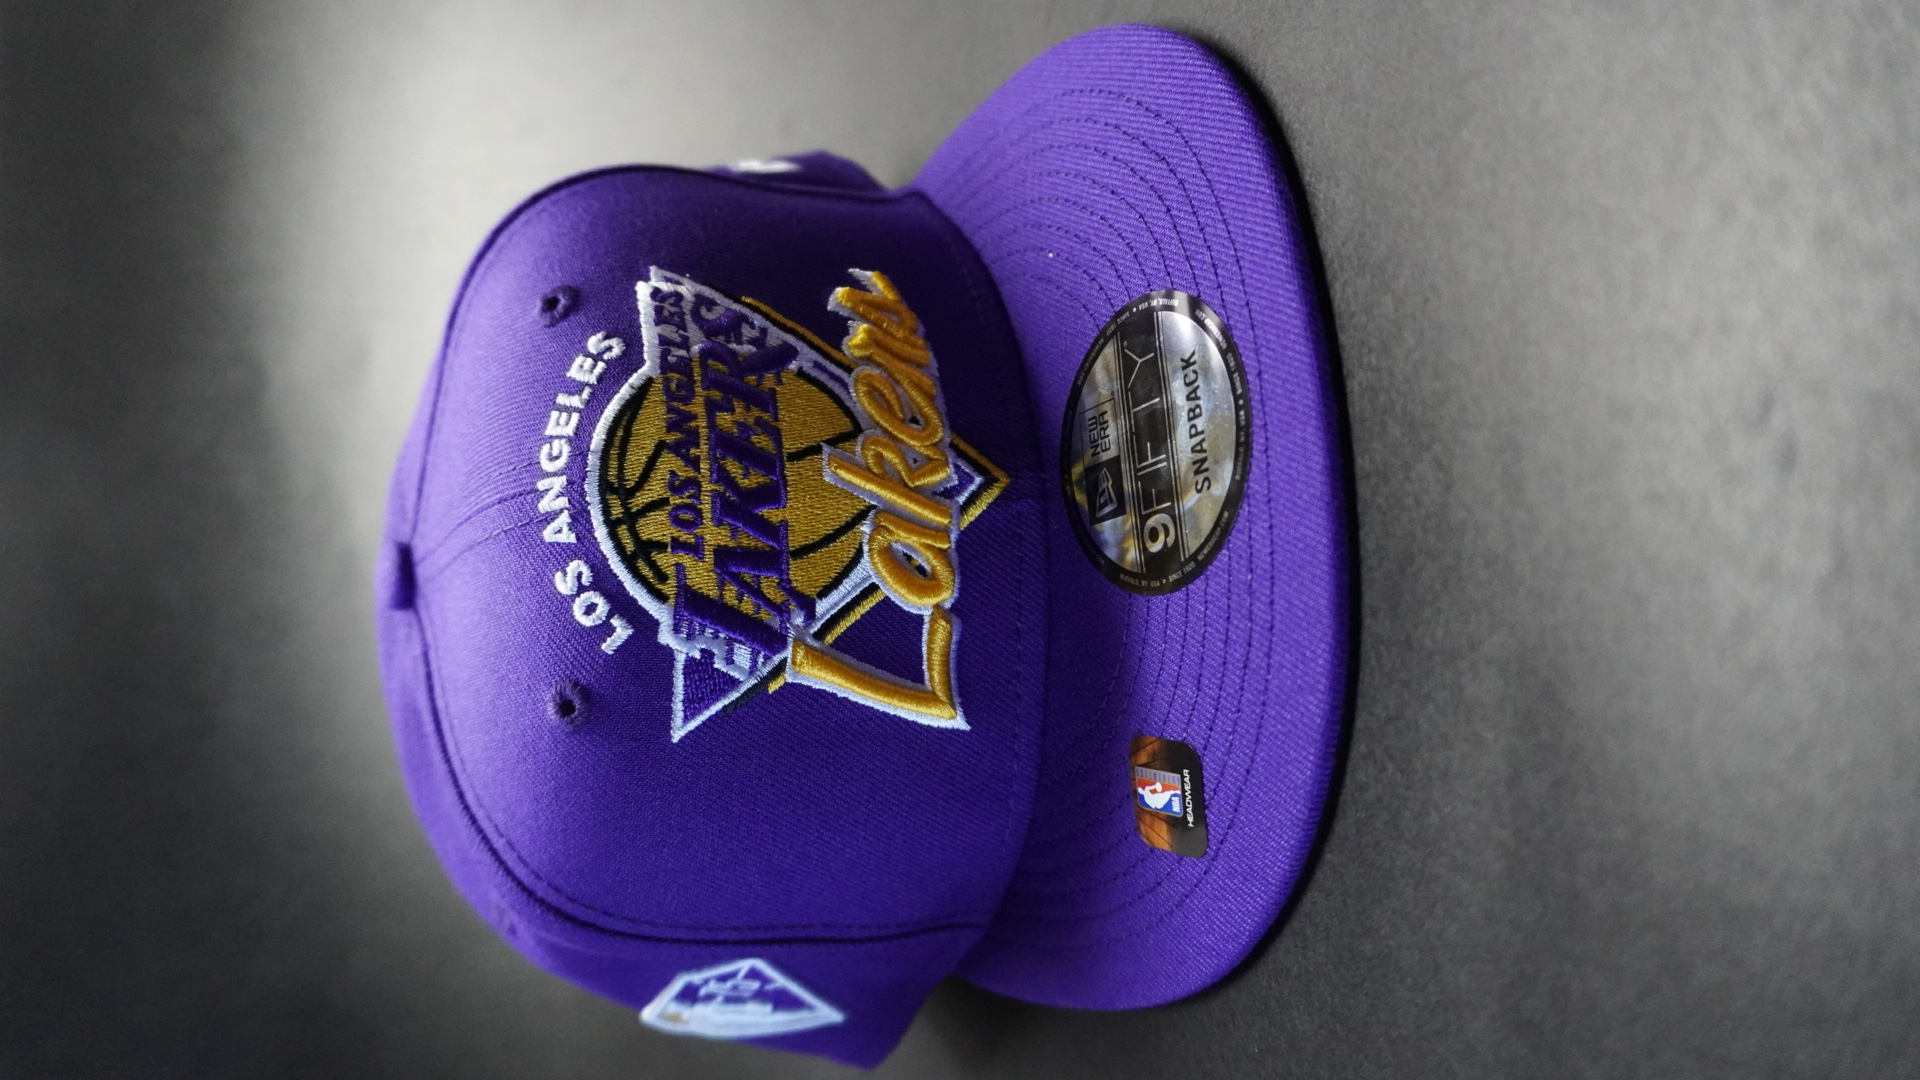 Los Angeles Lakers Mitchell & Ness NBA 75th Anniversary Snapback Hat - Black